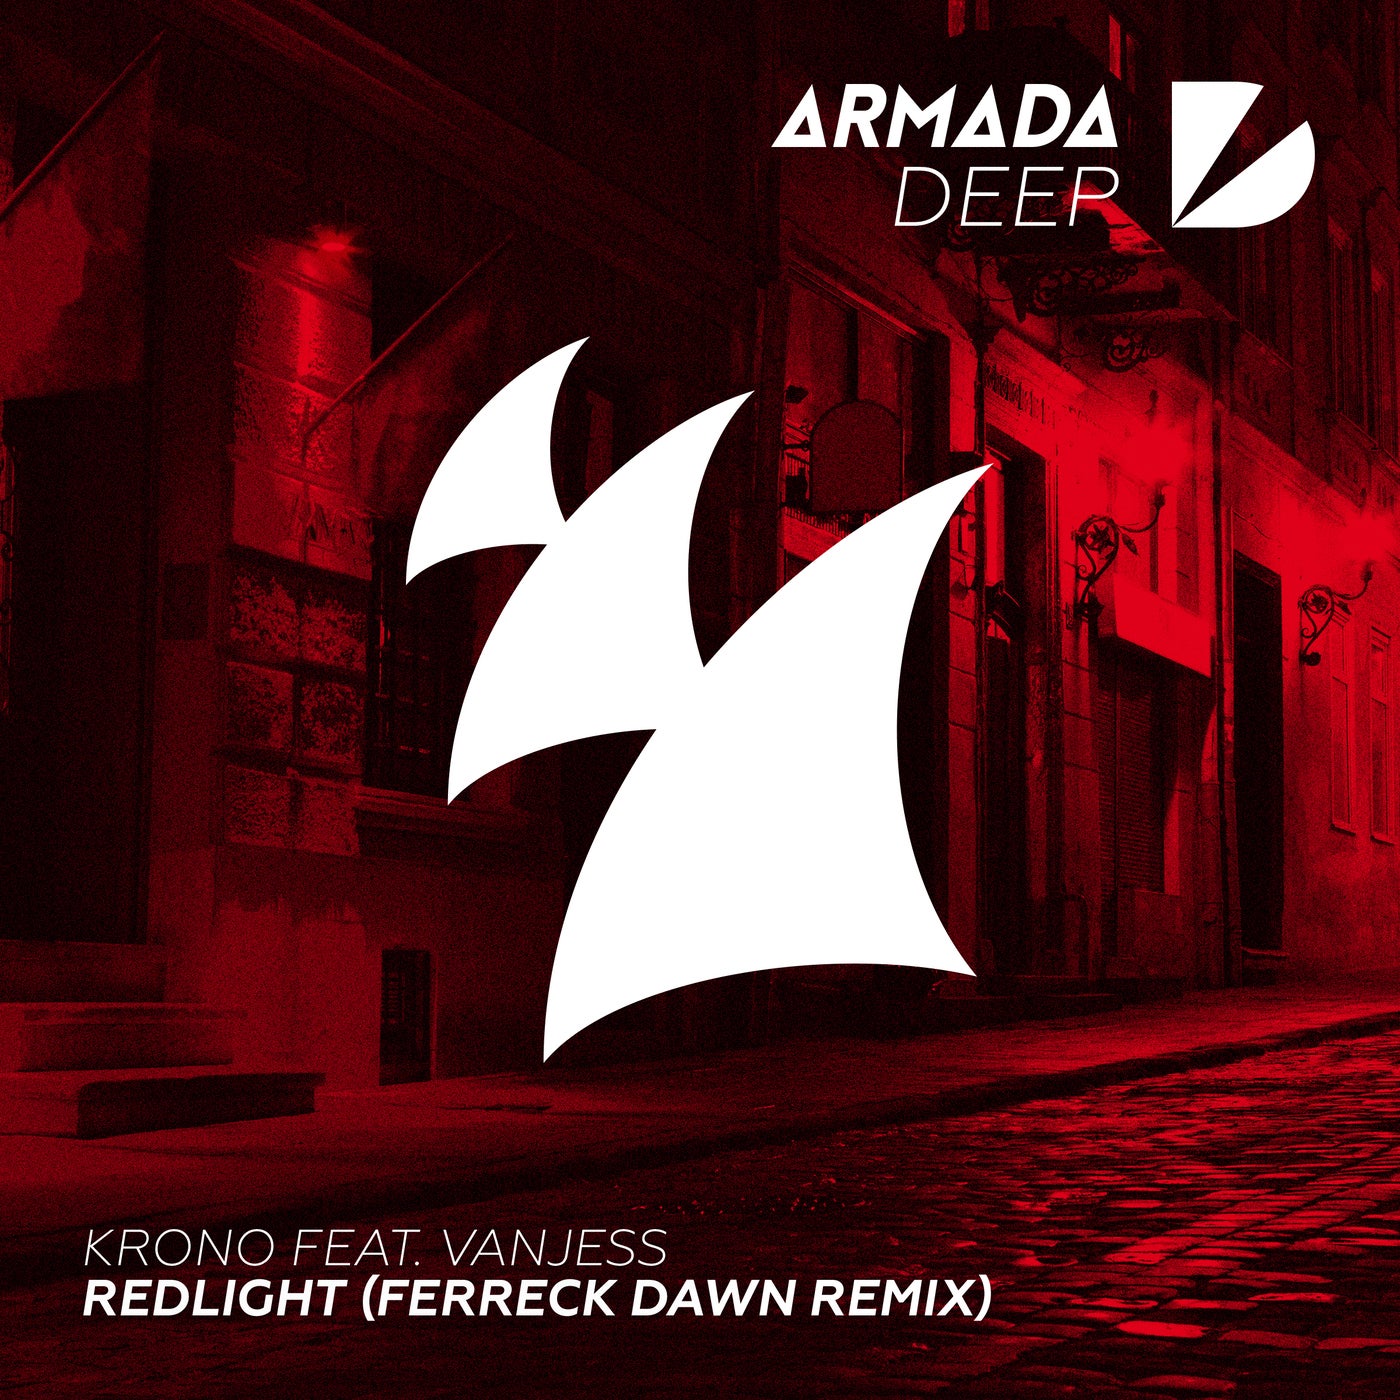 Redlight - Ferreck Dawn Remix